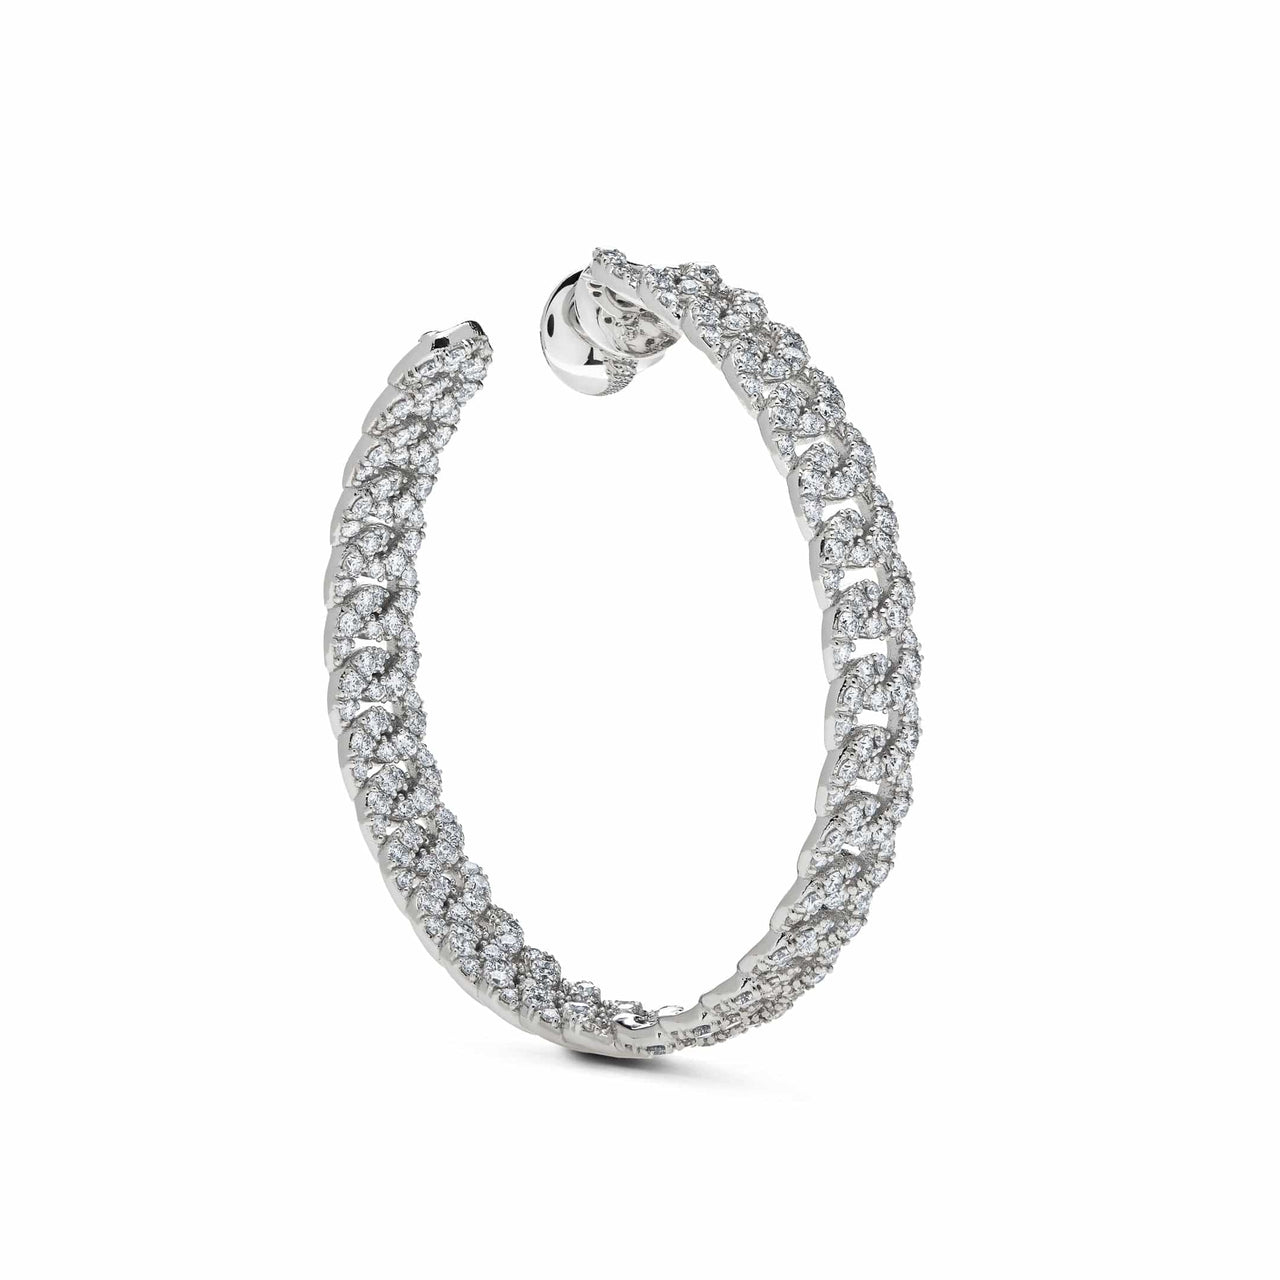 Large Pave Diamond Chain Link Hoop Earrings Wrist Aficionado